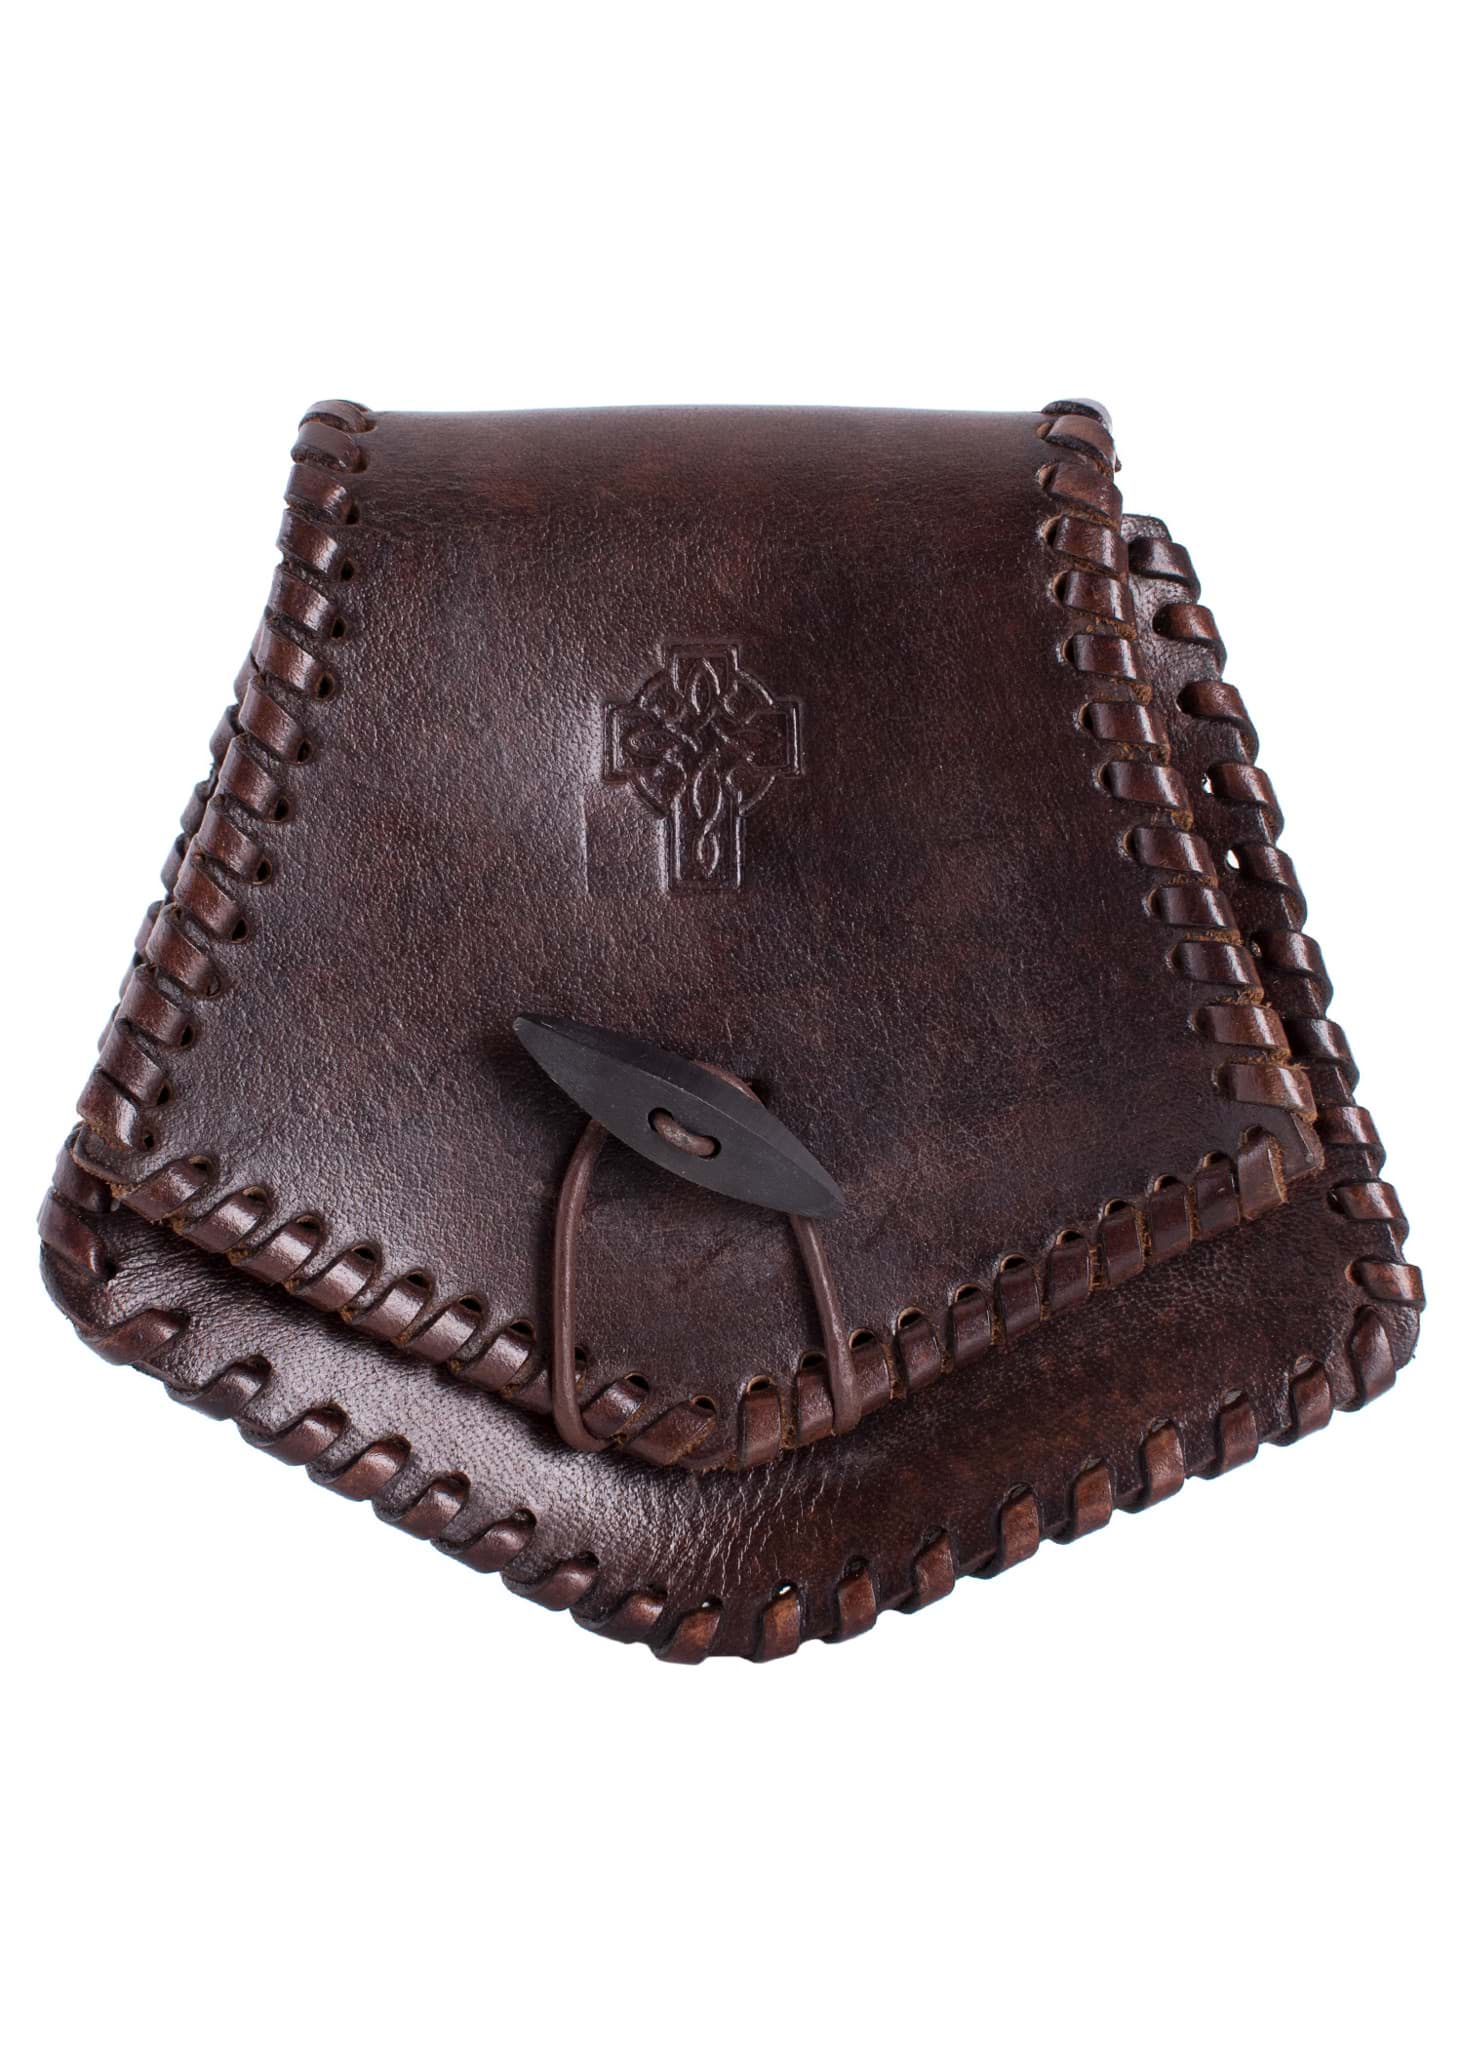 Picture of Battle Merchant - Celtic Leather Bag Pictish Design